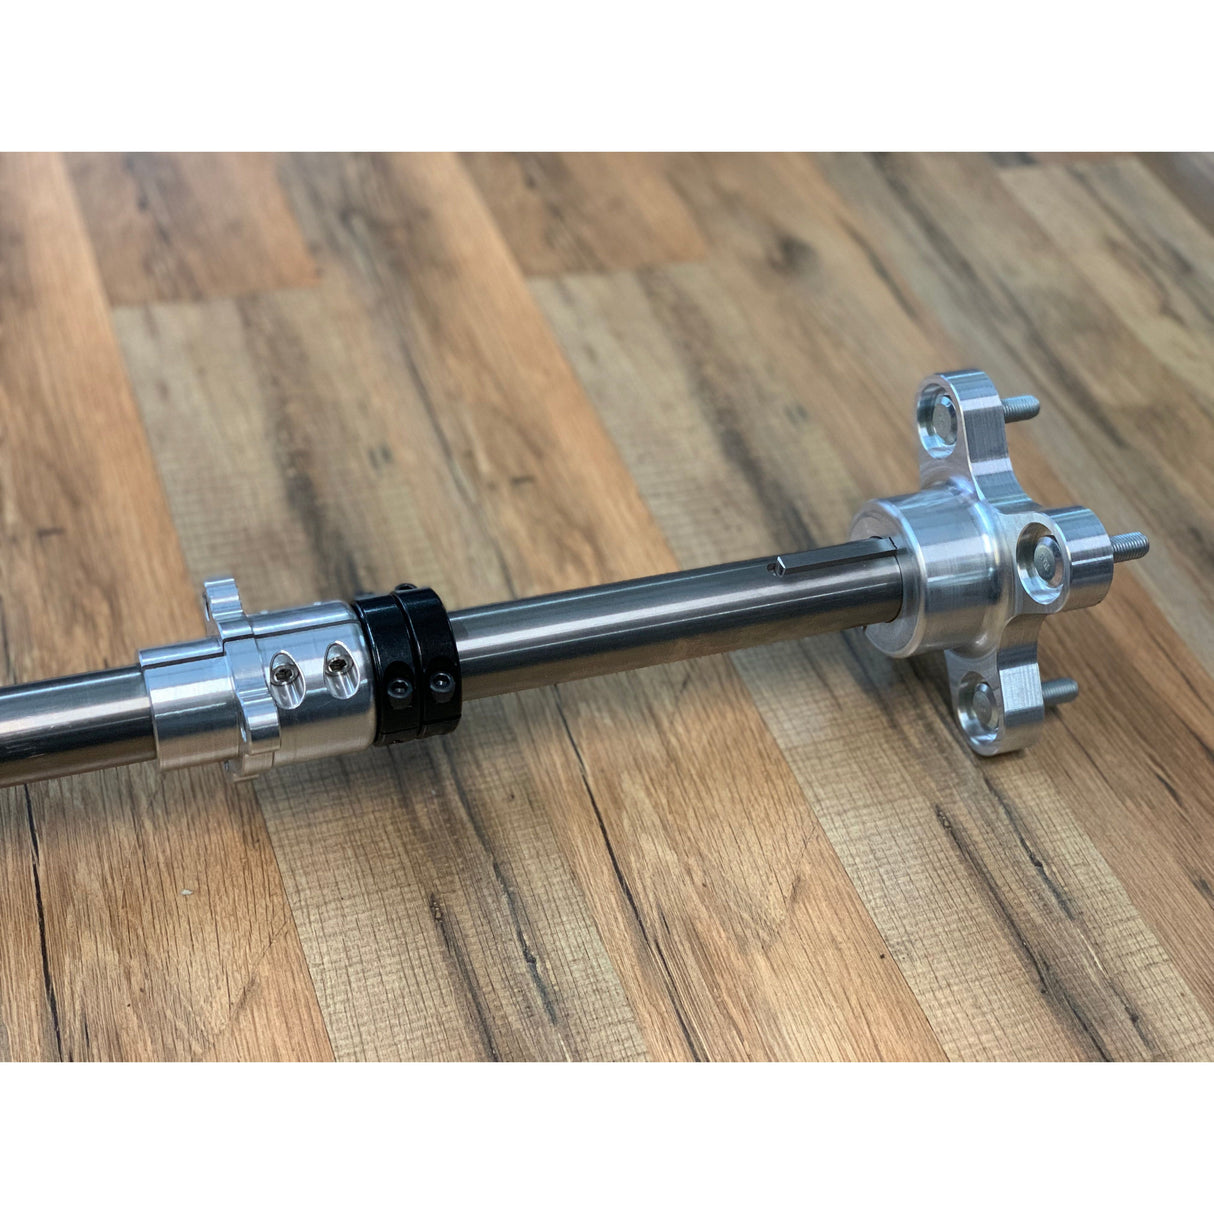 Titanium Axle - Stainless Steel Key Way Set